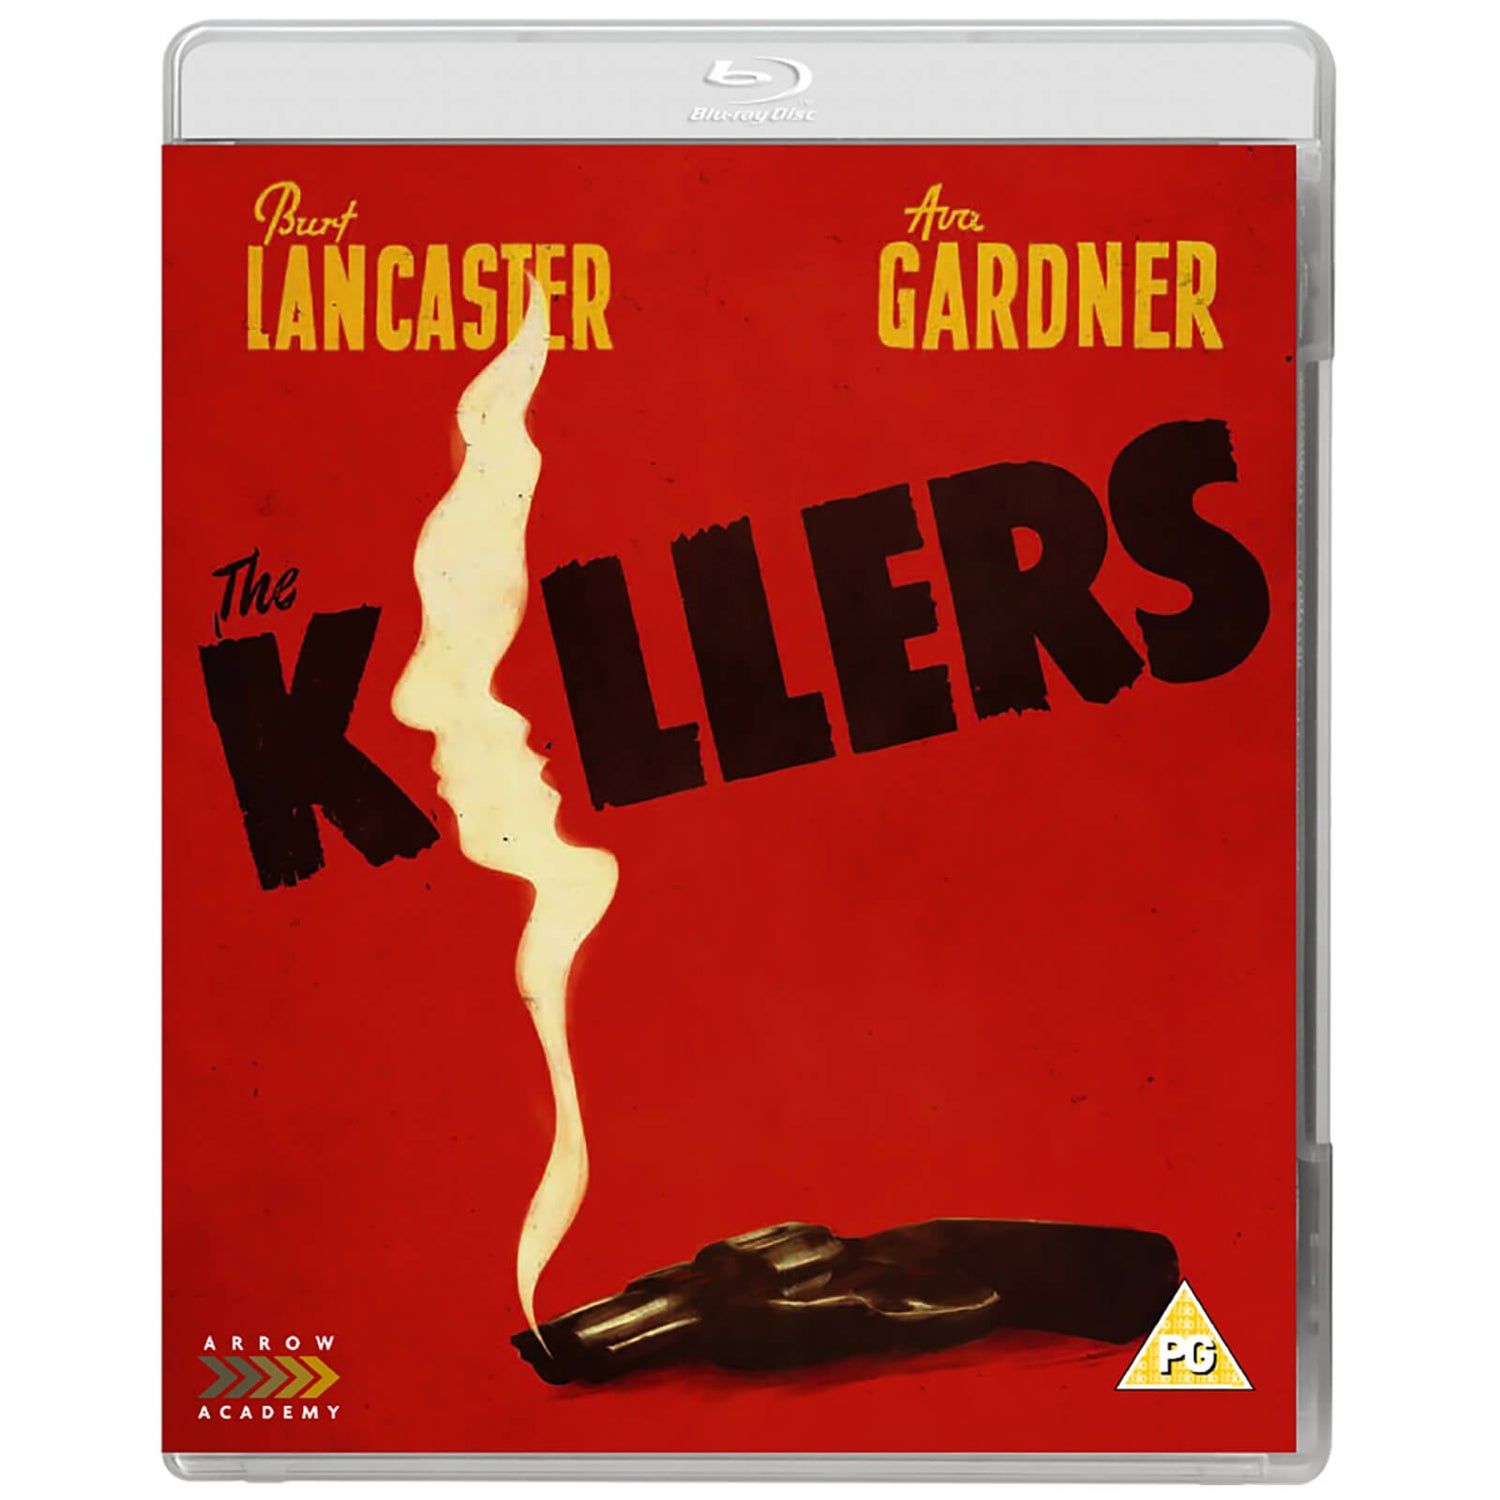 The Killers Blu-ray